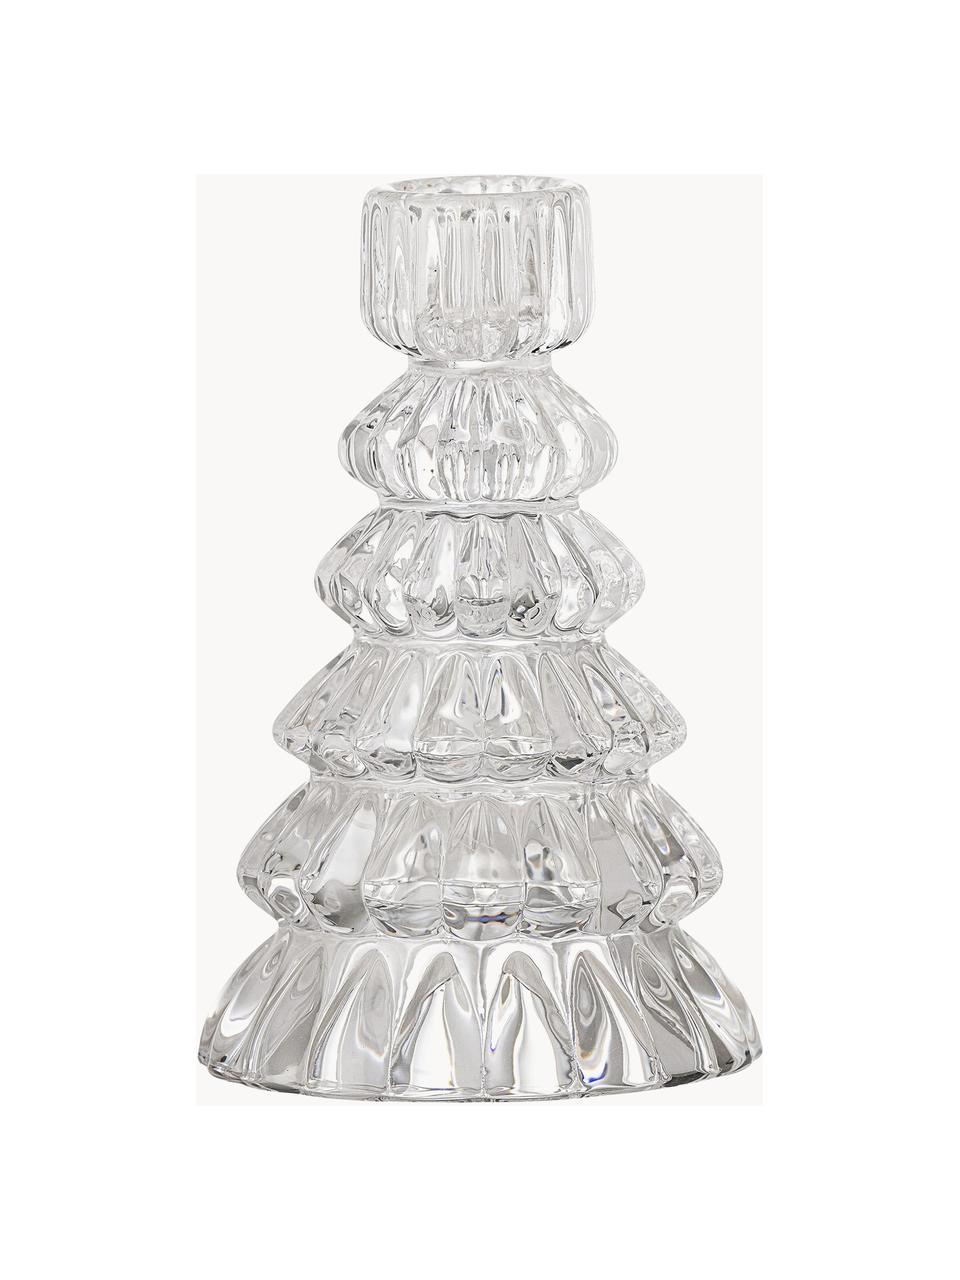 Kerstkandelaar Saynab in de vorm van een dennenboom, Glas, Transparant, Ø 9 x H 13 cm